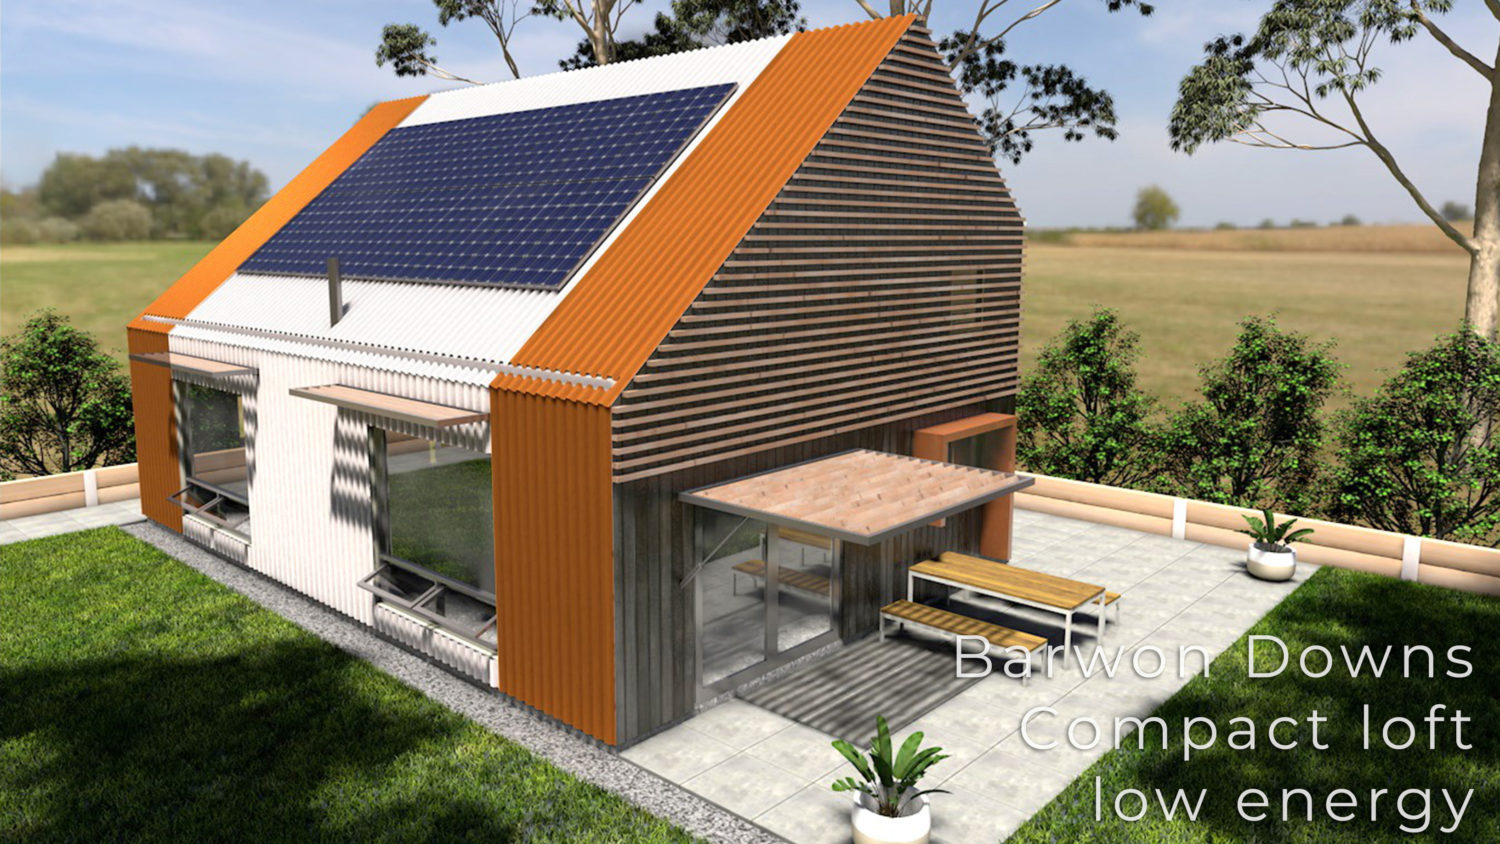 Compact loft style studio home, energy efficient